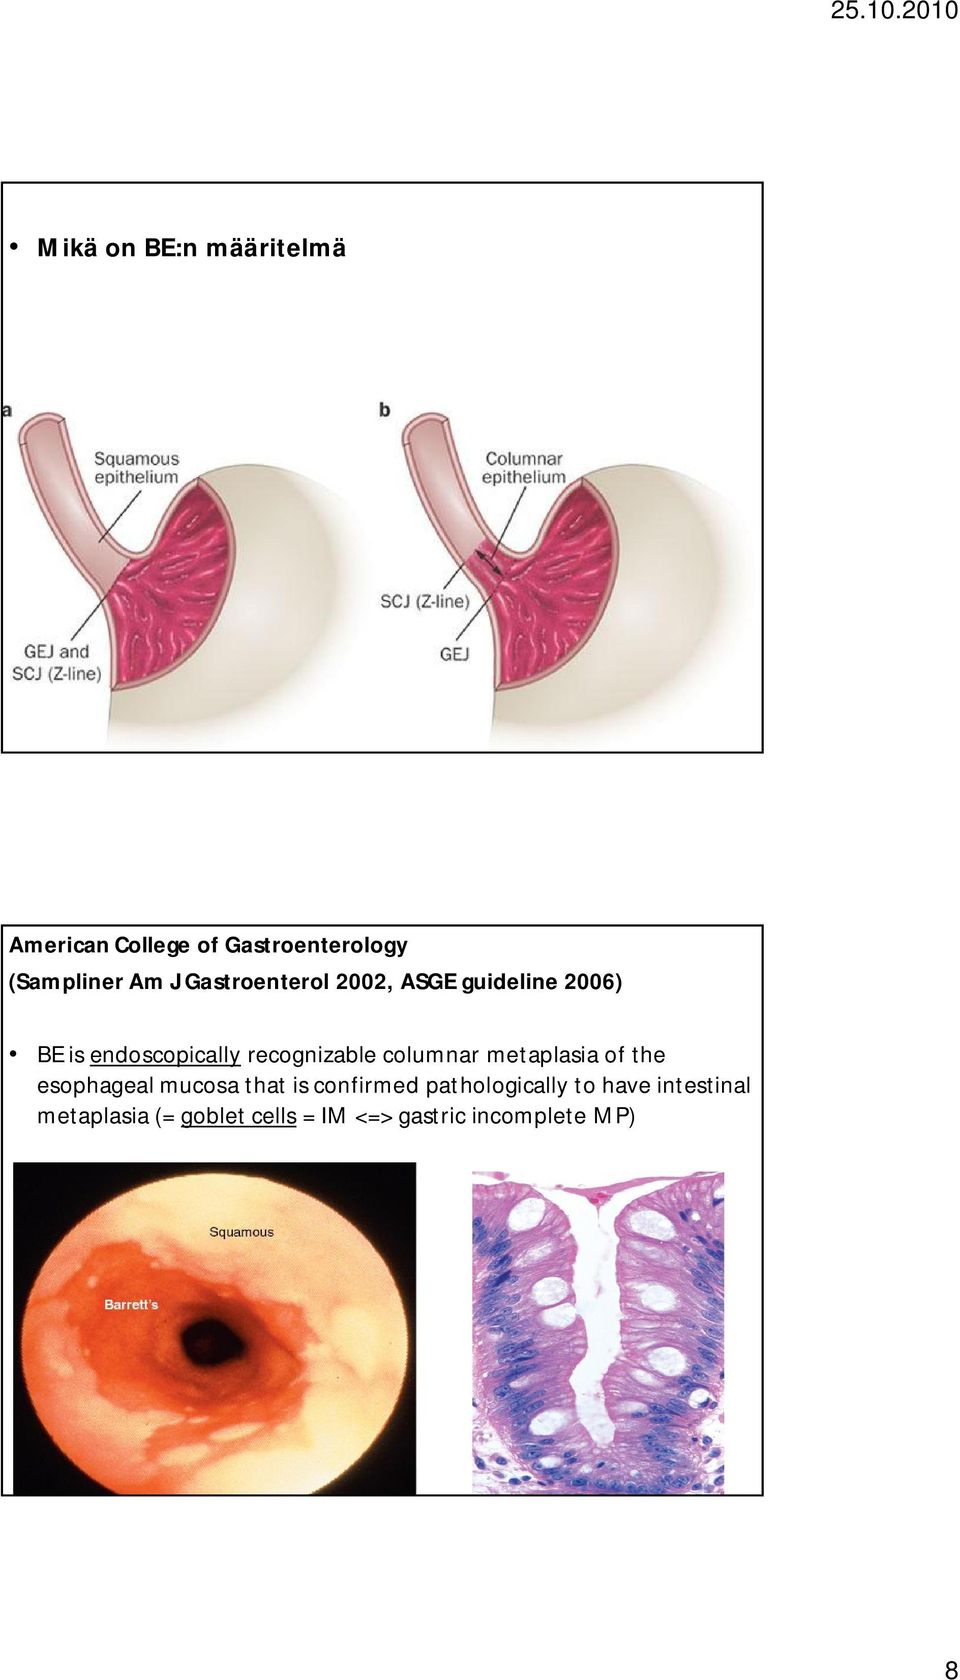 (Sampliner Am J Gastroenterol 2002, ASGE guideline 2006) BE is endoscopically recognizable columnar metaplasia of the